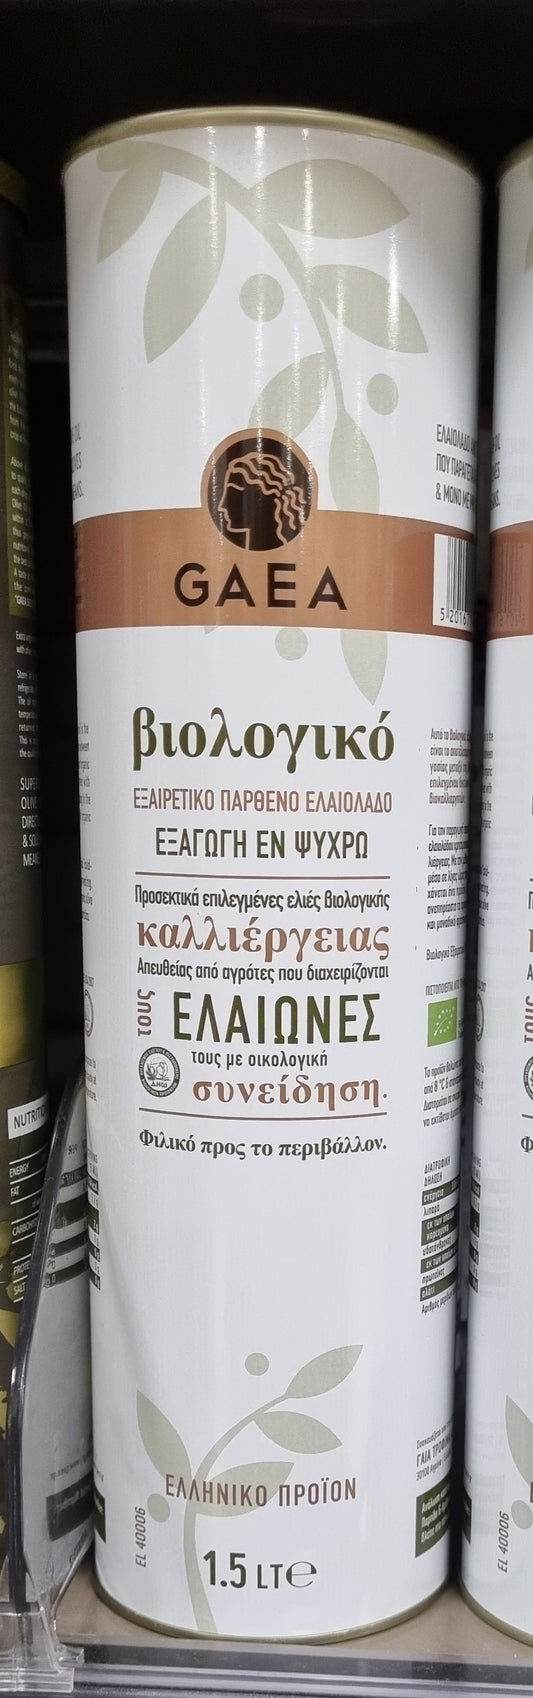 Gaea olive oil 1.5 litres